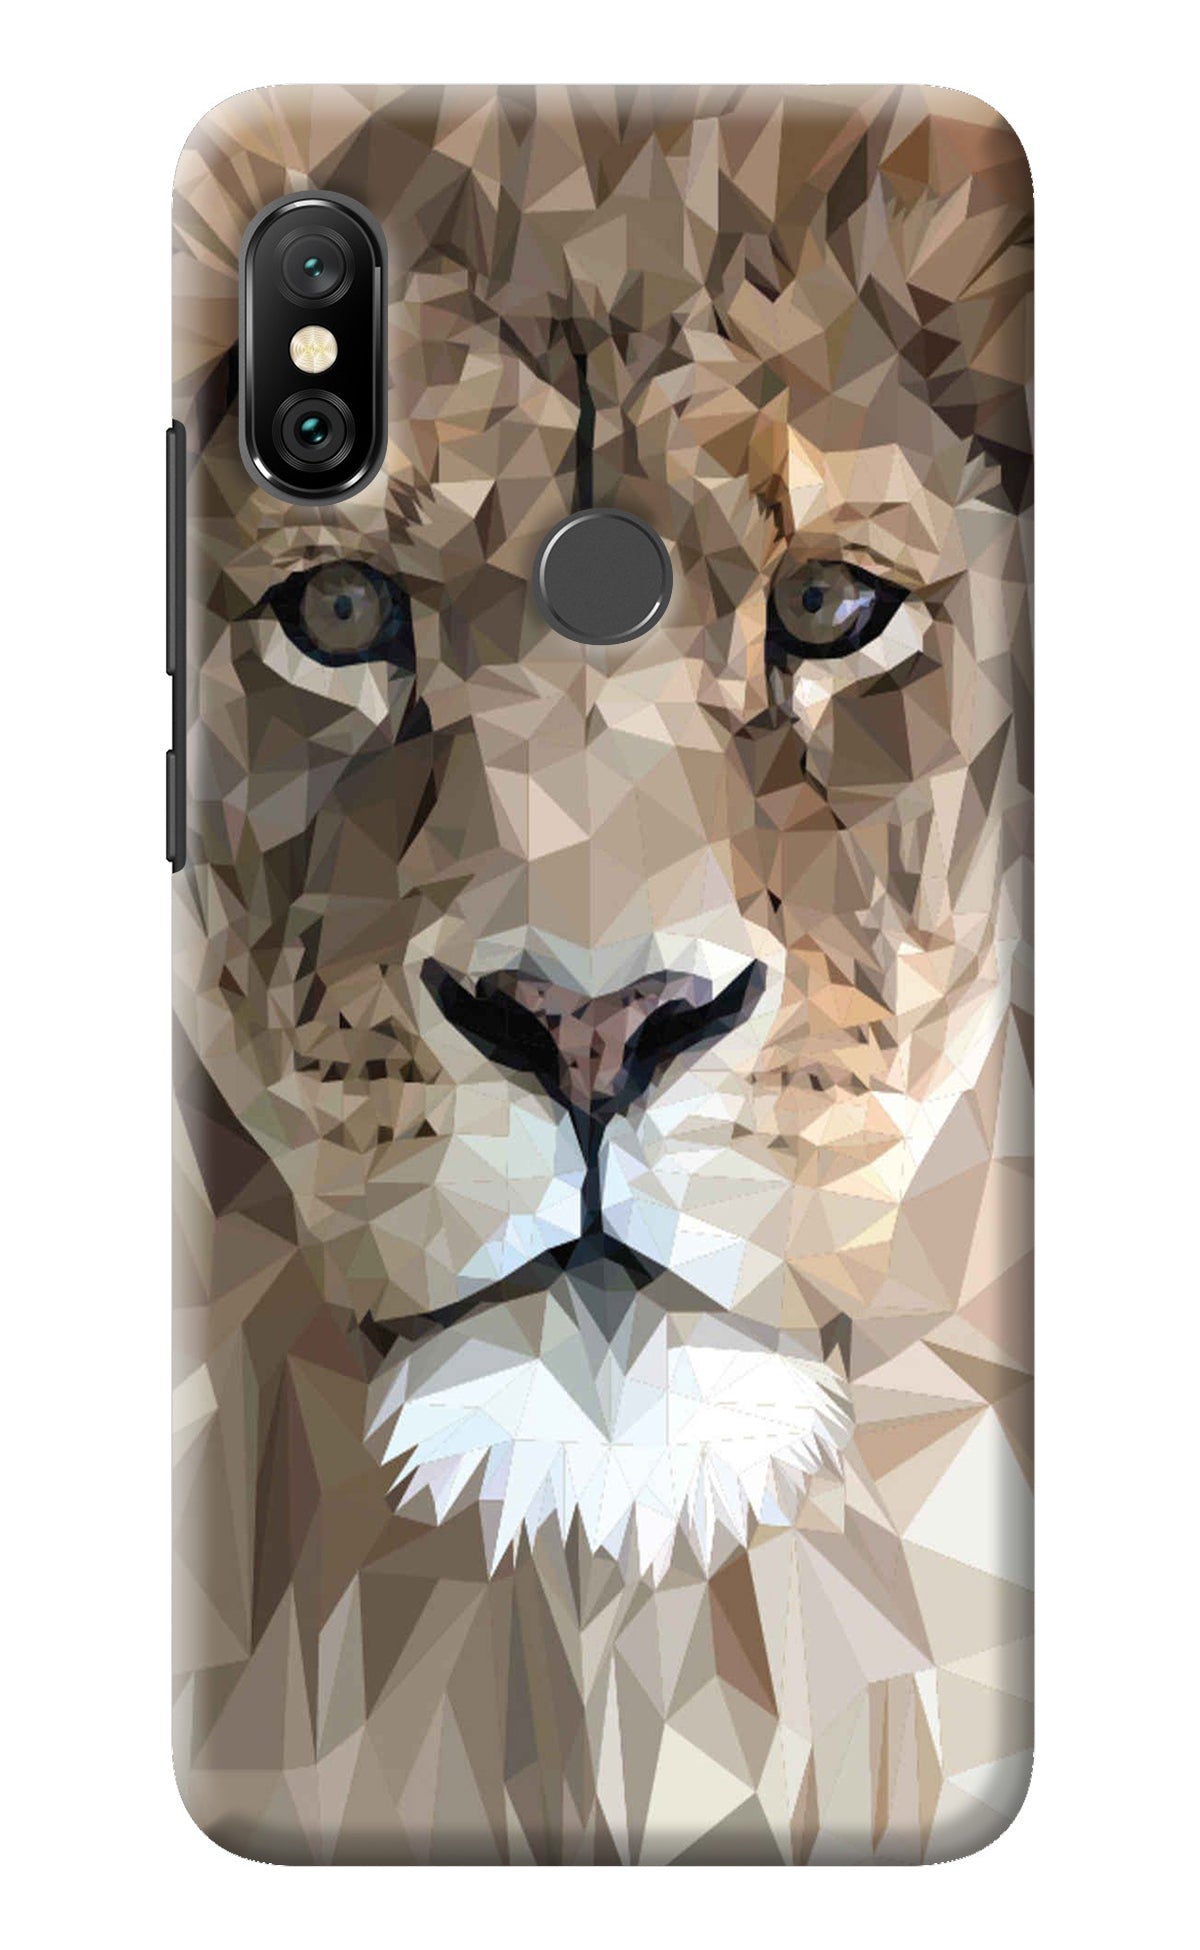 Lion Art Redmi Note 6 Pro Back Cover